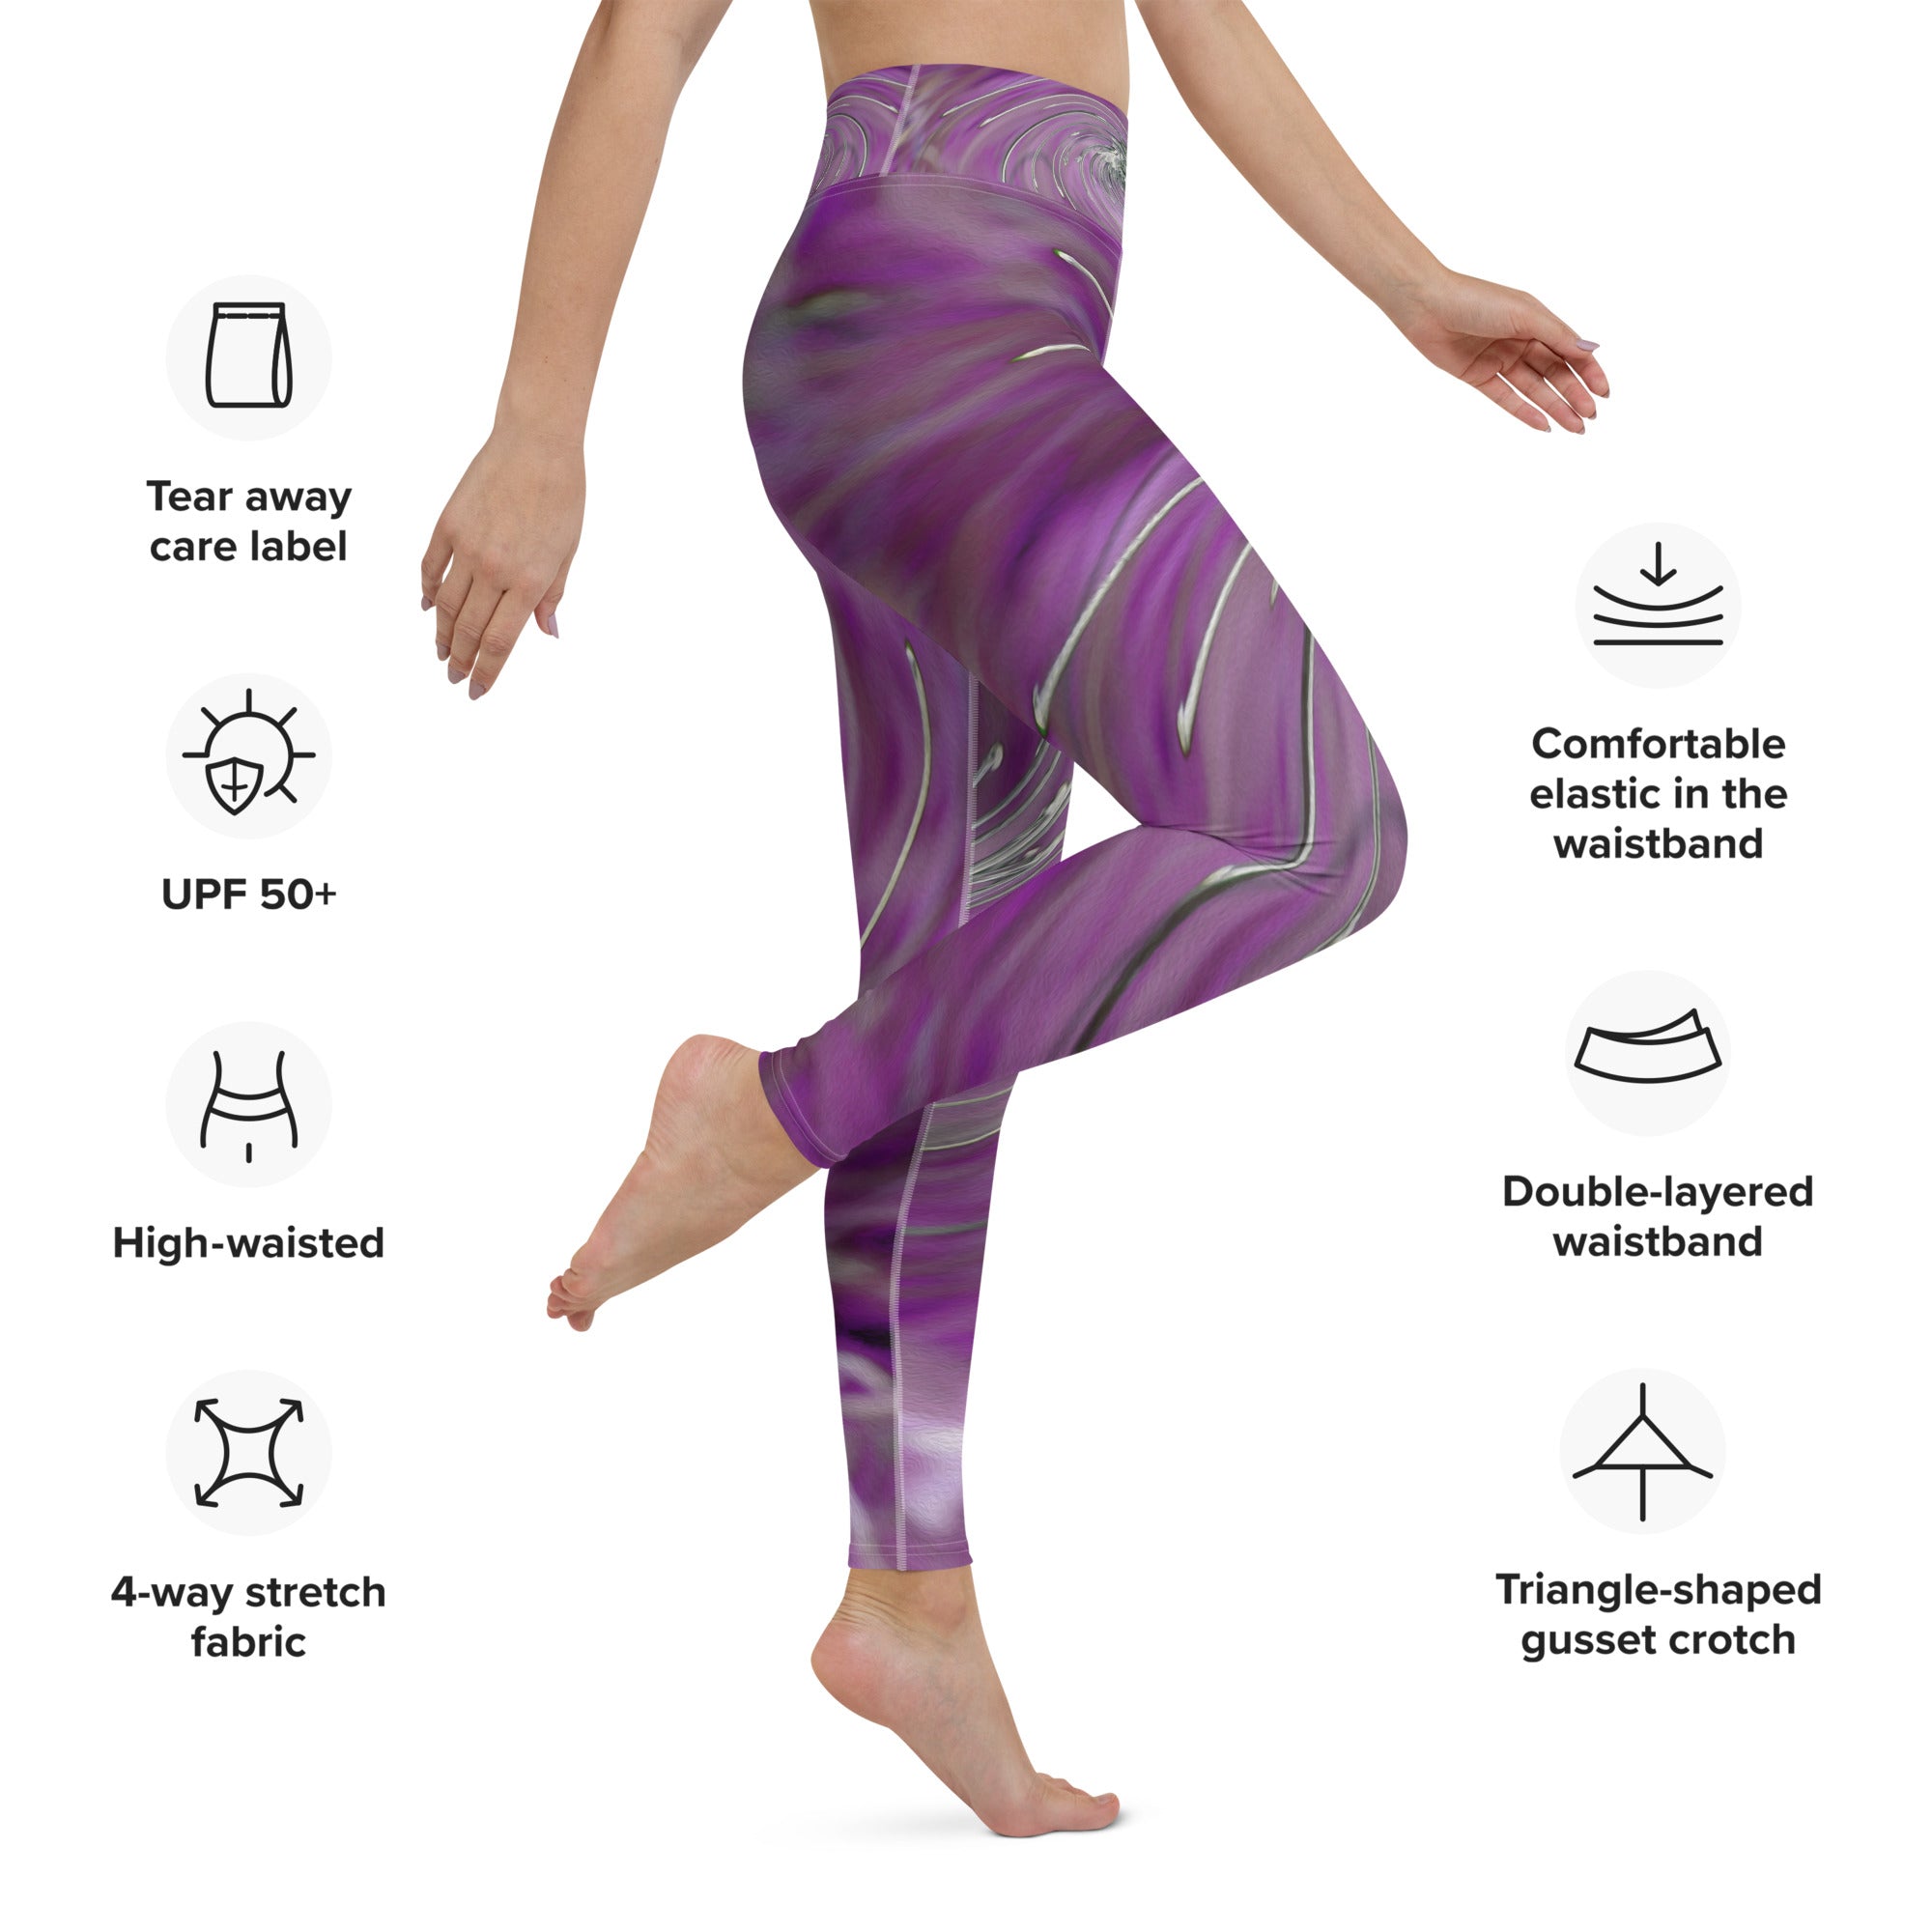 Yoga Leggings, Cool Abstract Purple Floral Swirl